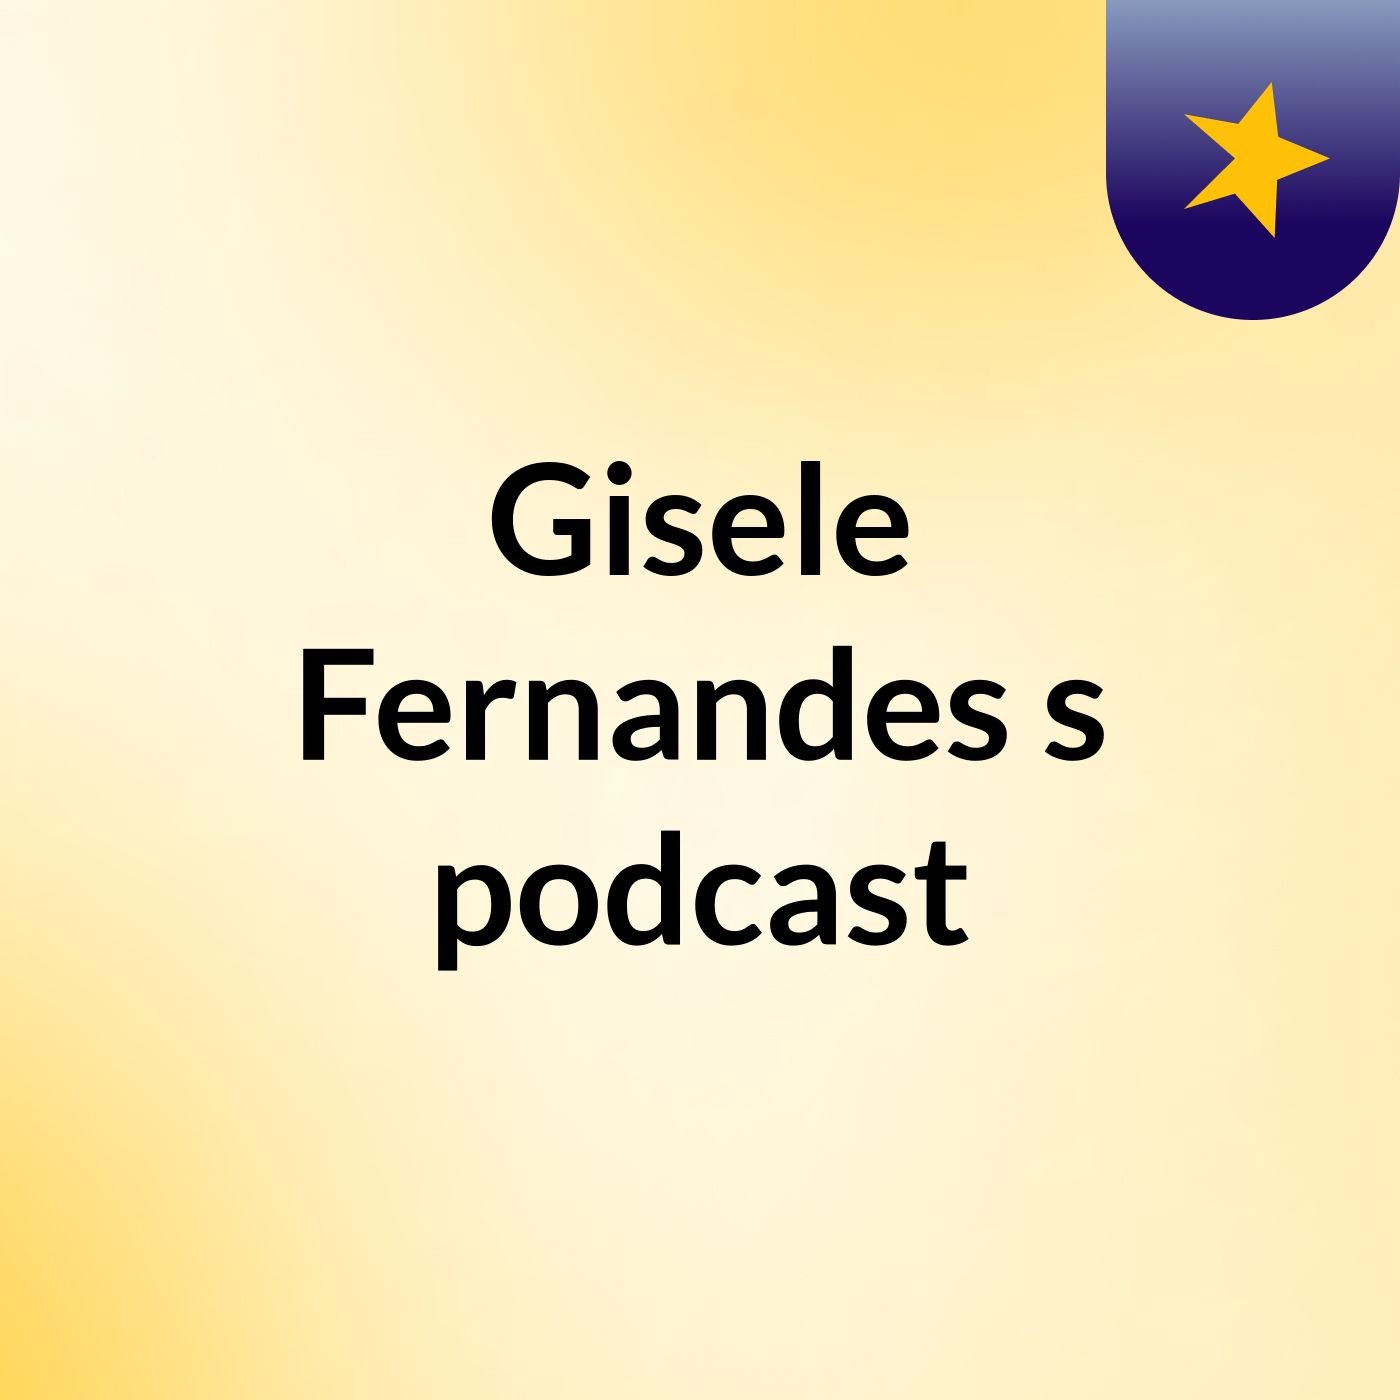 Gisele Fernandes's podcast